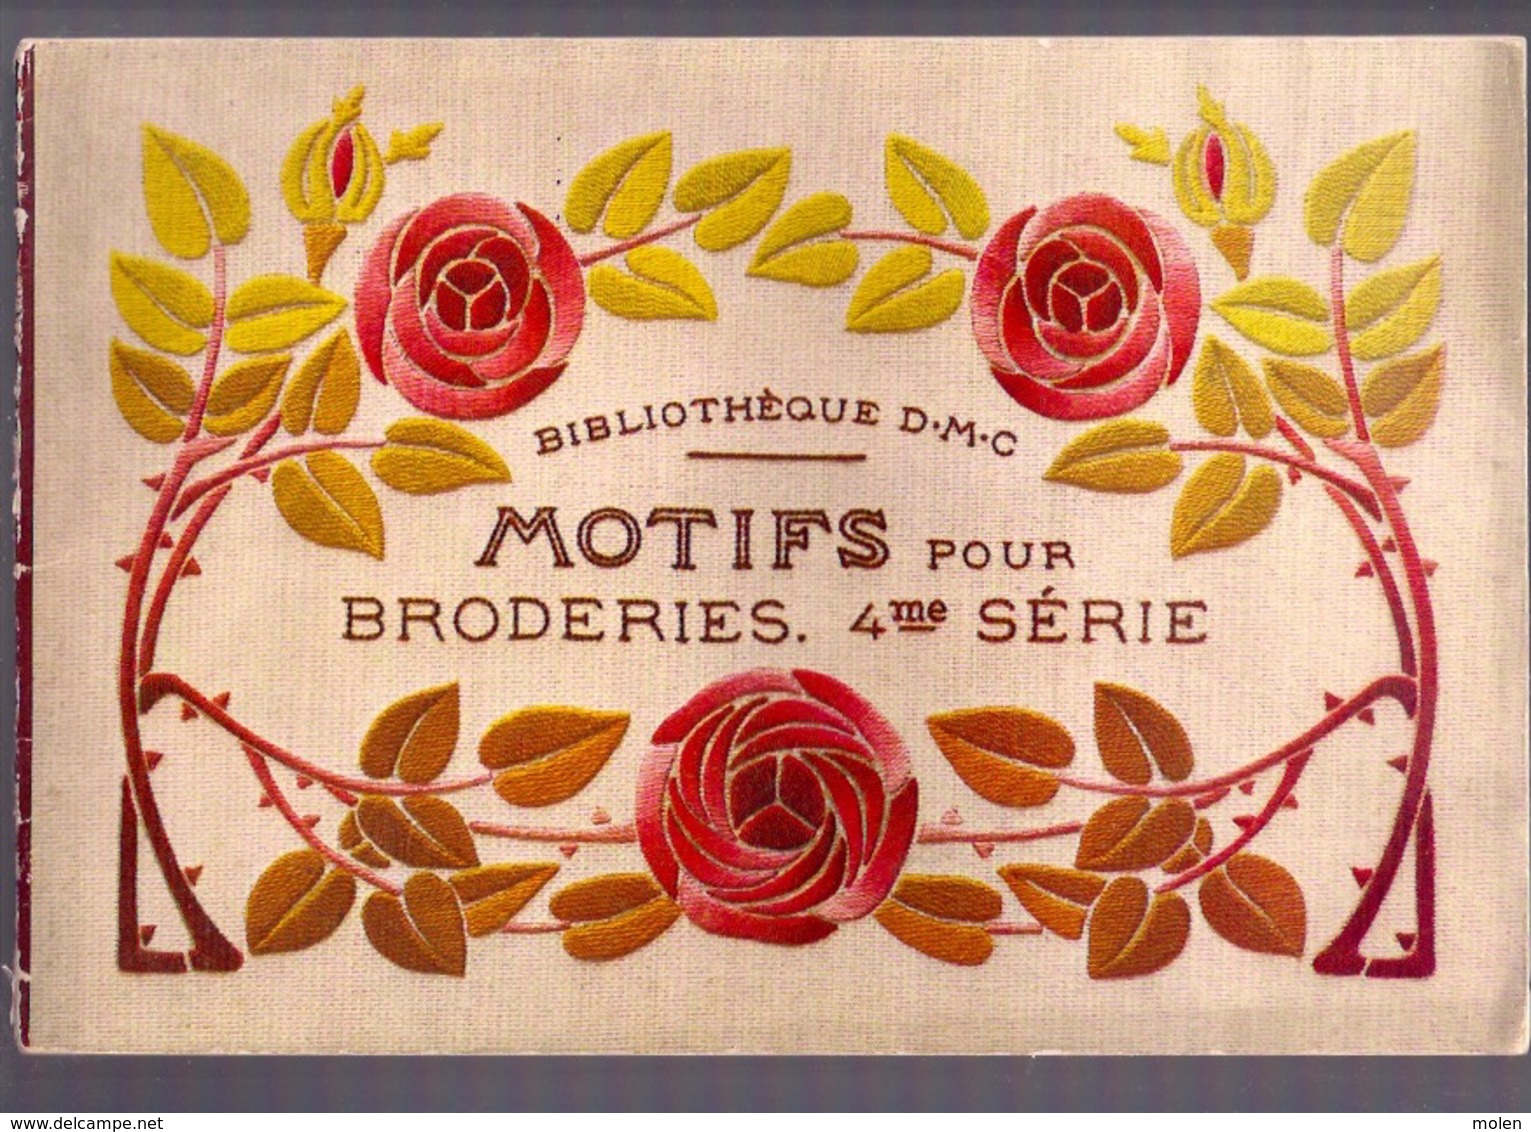 MOTIFS Pour BRODERIES 4me BIBLIOTHEQUE DMC Ca1935 BRODERIE D.M.C. POINT DE CROIX CROSS STITCH KRUISSTEEK DENTELLE Z214 - Cross Stitch